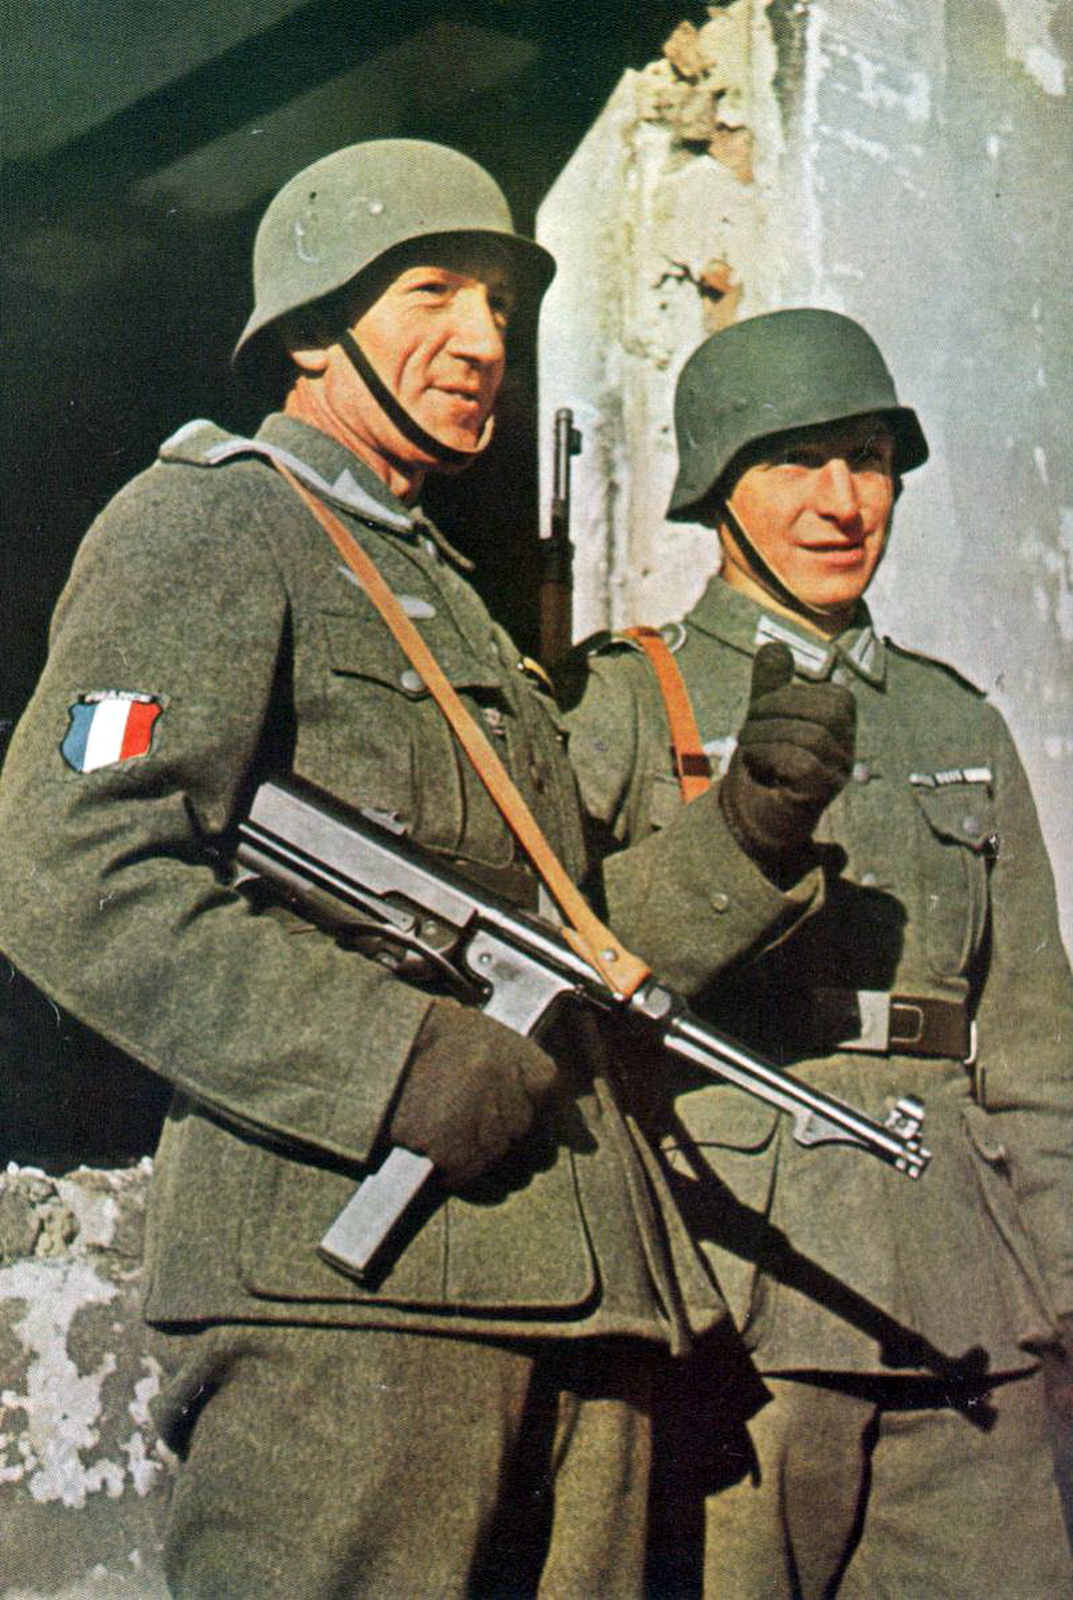  - División Azul y orgullo de ser español - Página 4 Soldiers of the Légion des Volontaires Français, when still part of the Wehrmacht